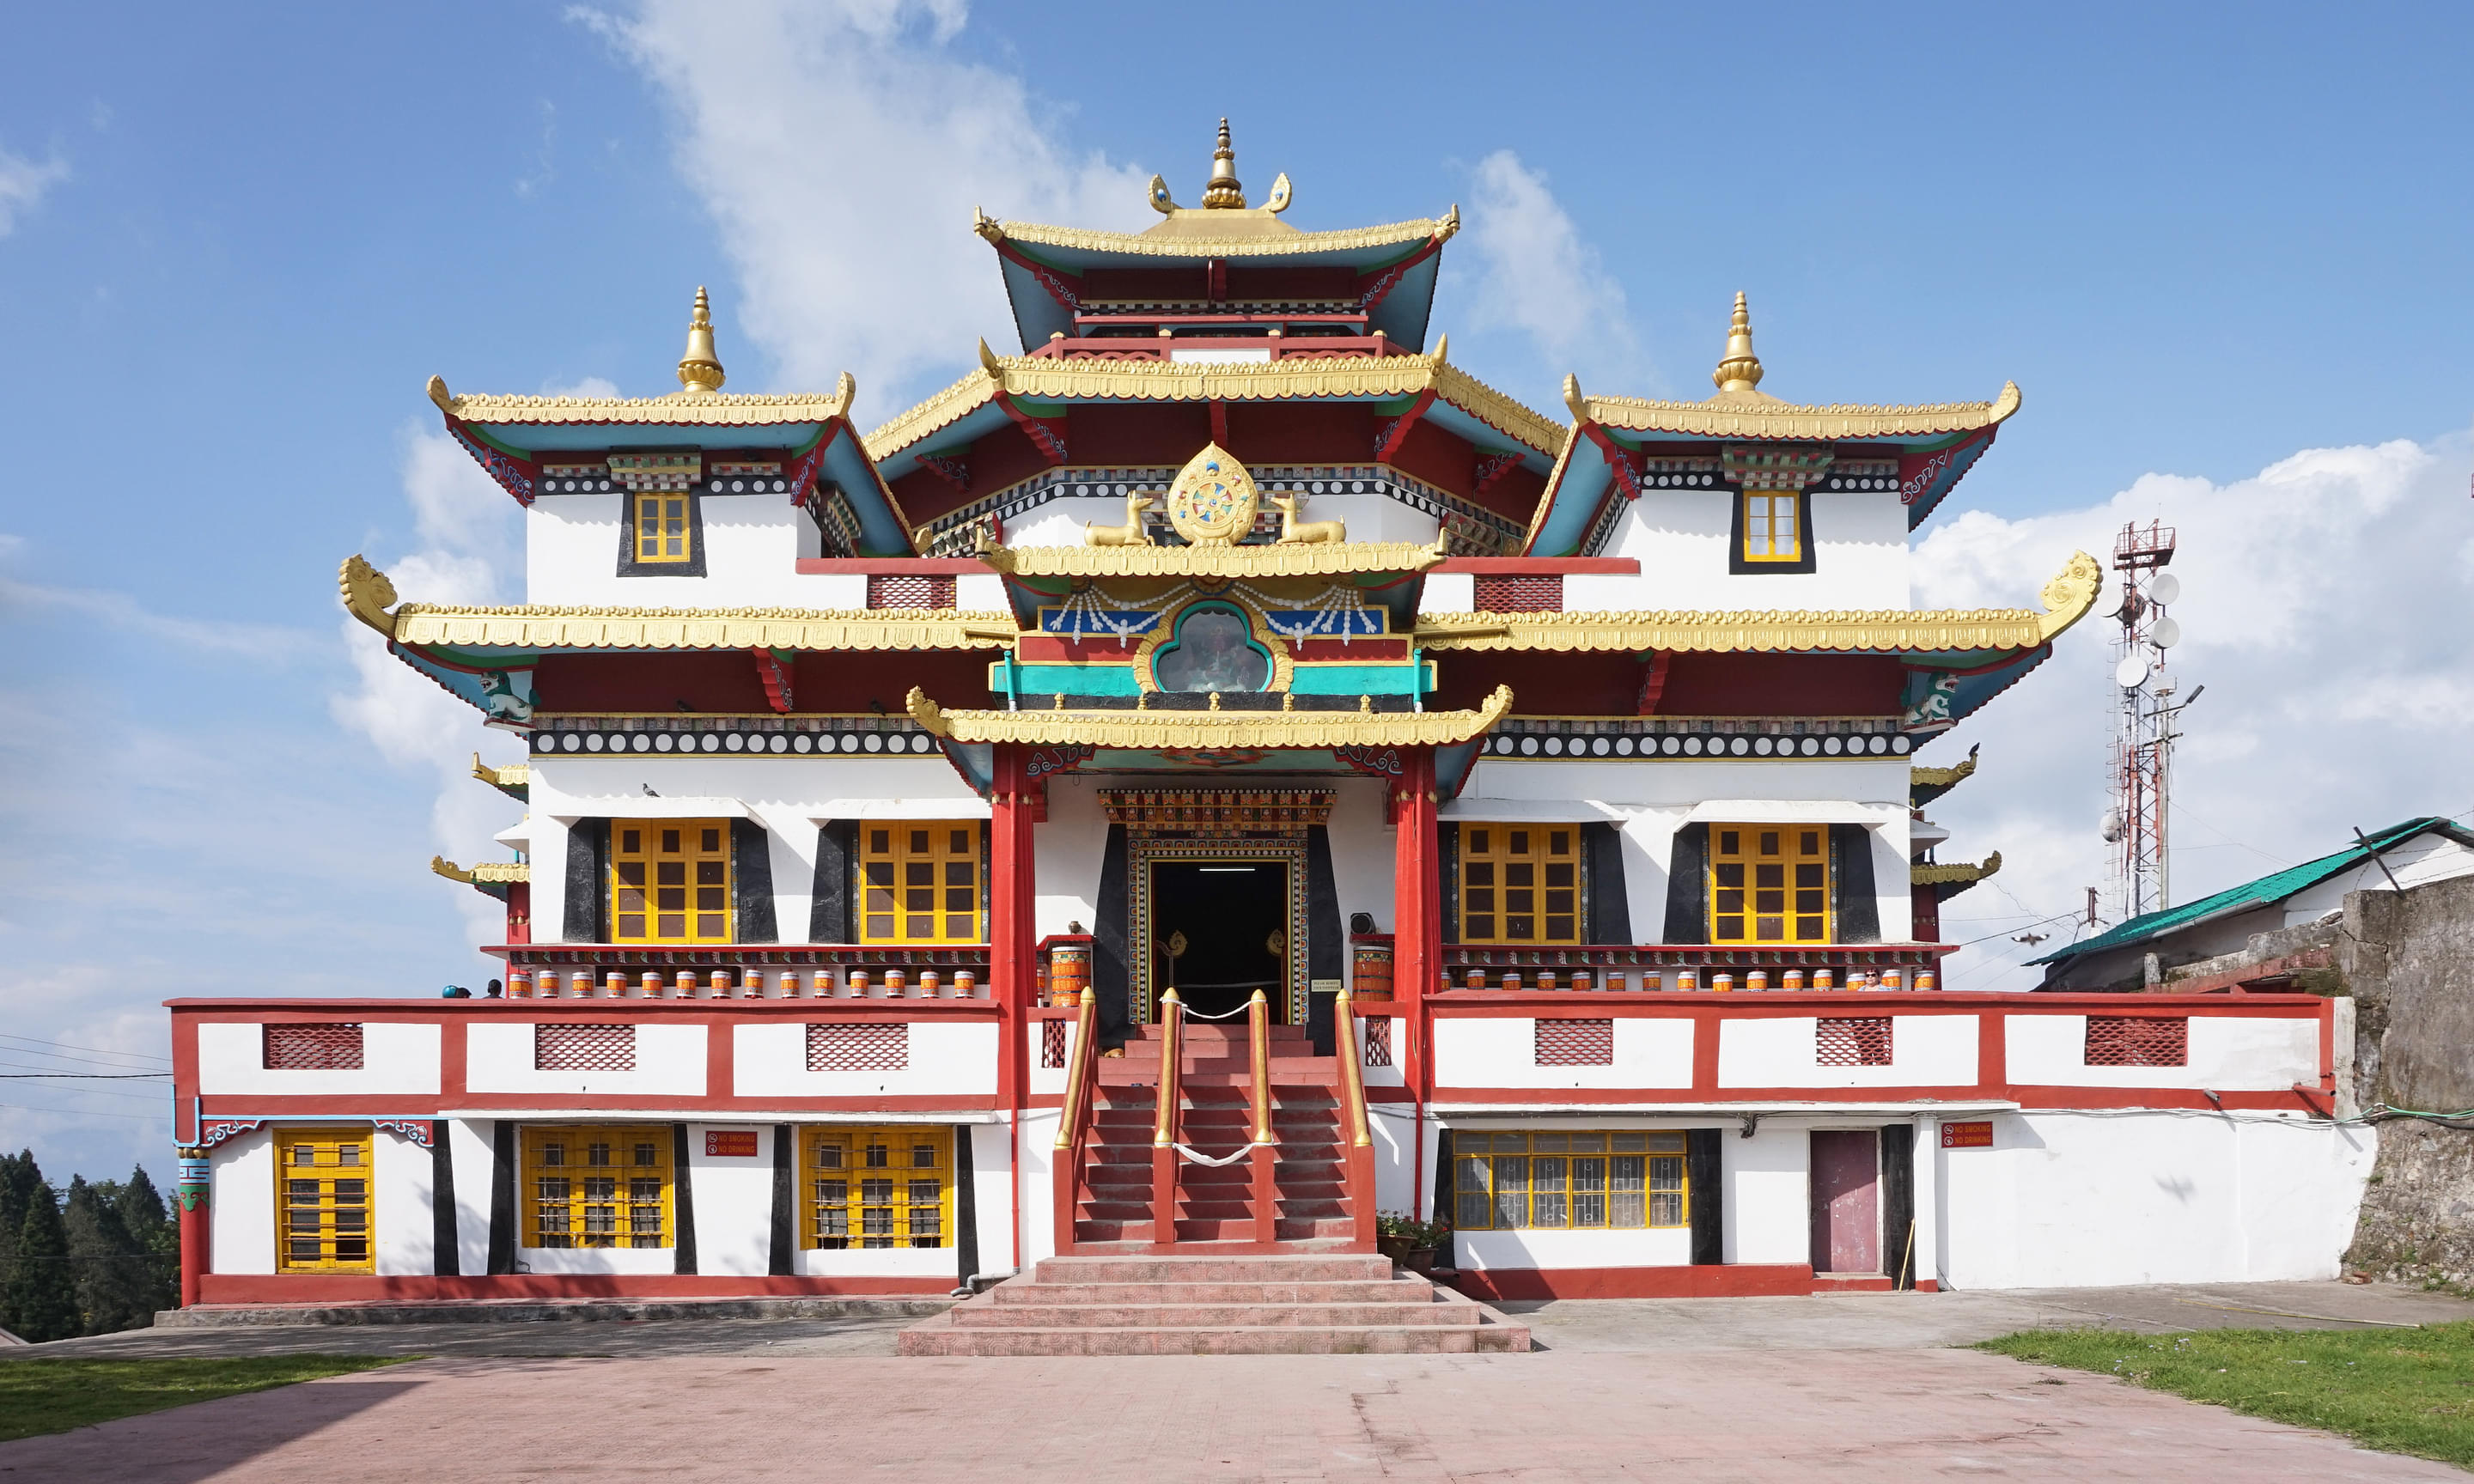 The Zang Dhok Palri Monastery Overview